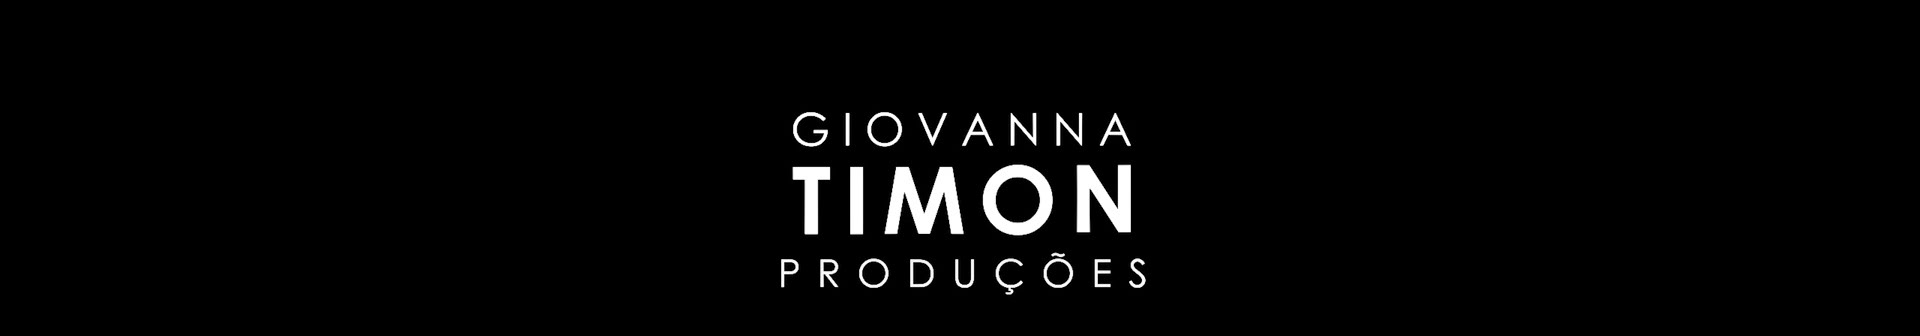 Giovanna Timon's profile banner